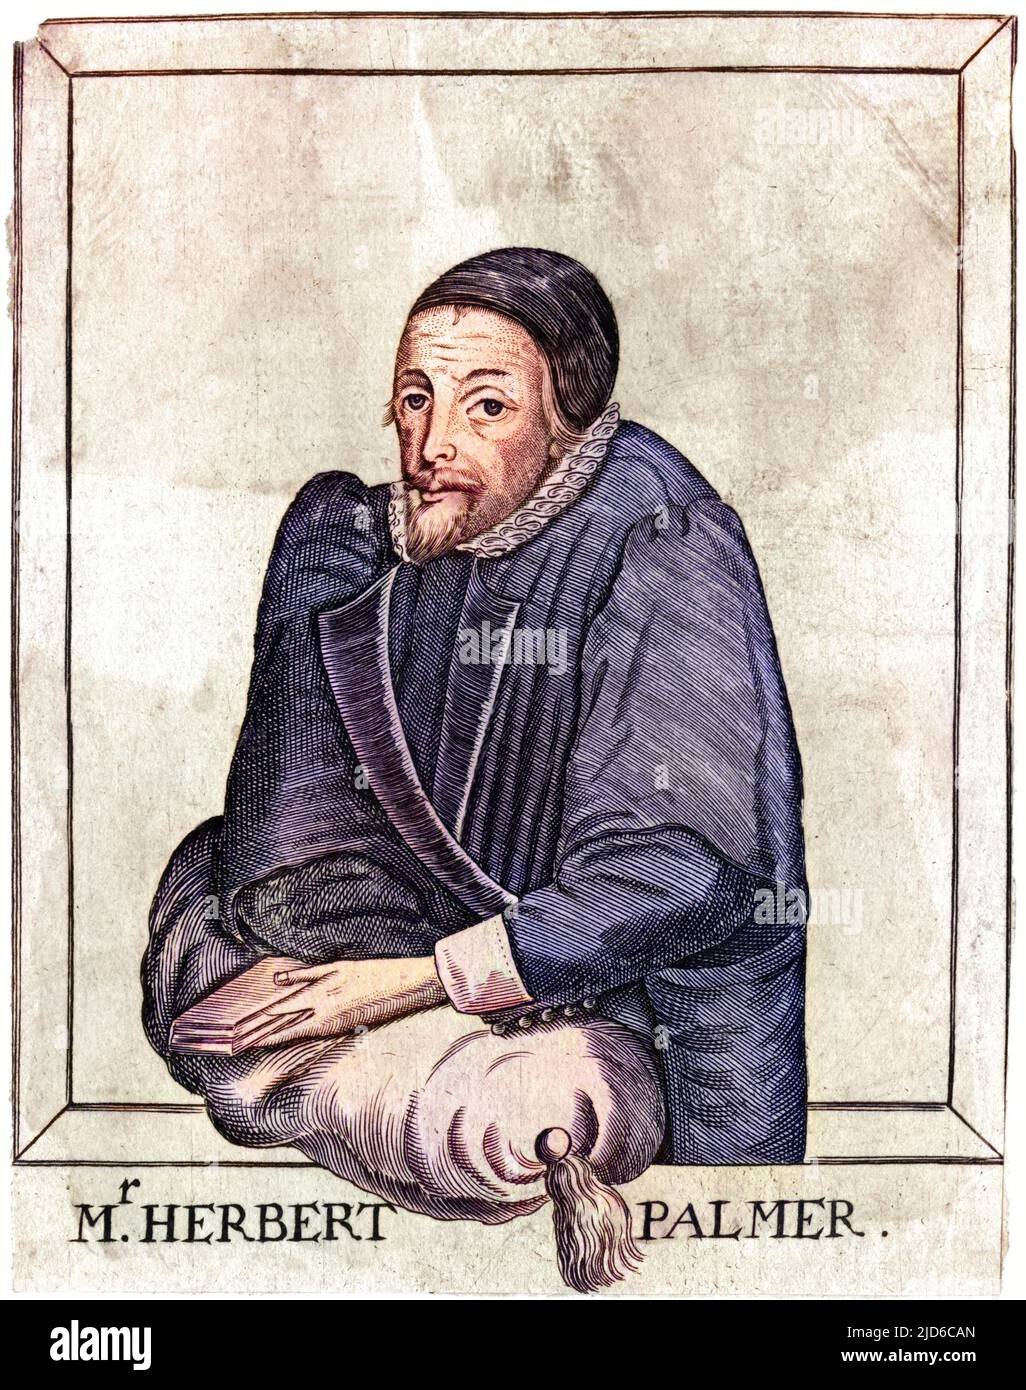 HERBERT PALMER Puritan churchman, resting his arm on a tasseled cushion. Colourised version of : 10171892       Date: 1601 - 1647 Stock Photo